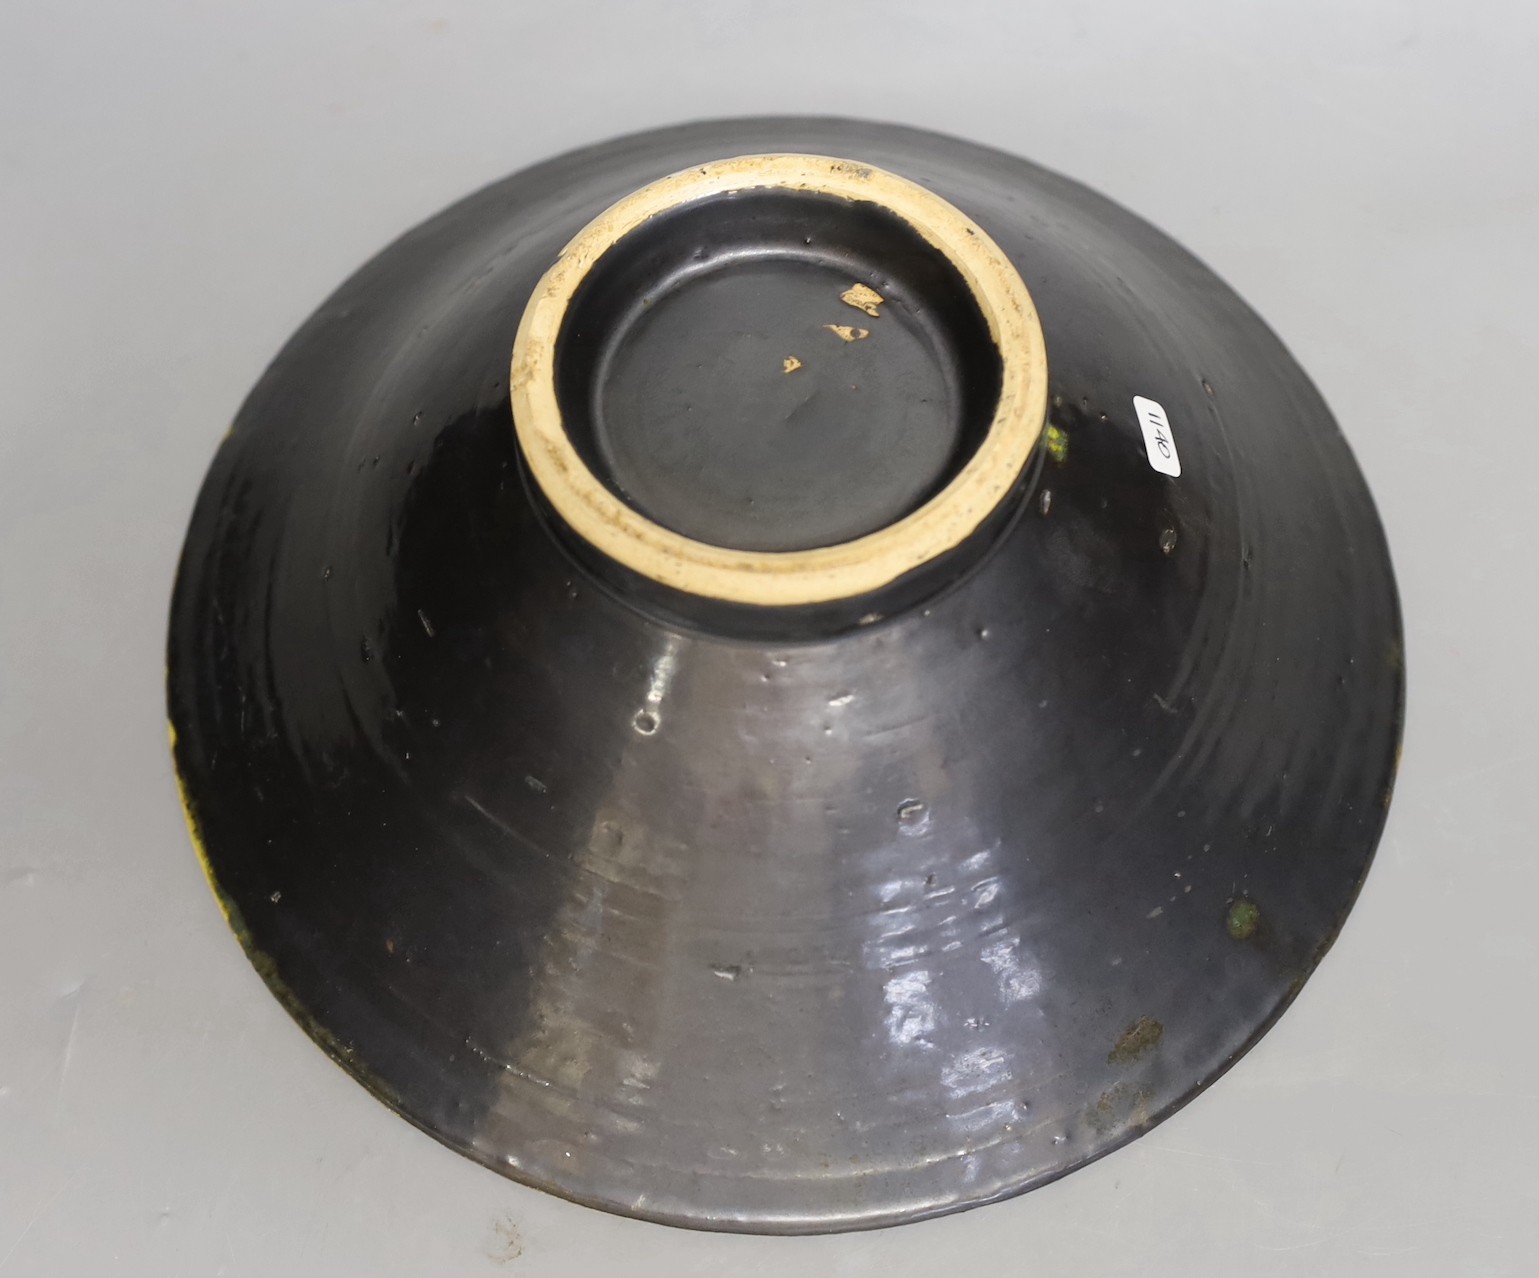 A large Chinese Jizhou type black bowl, 24.5cms diameter